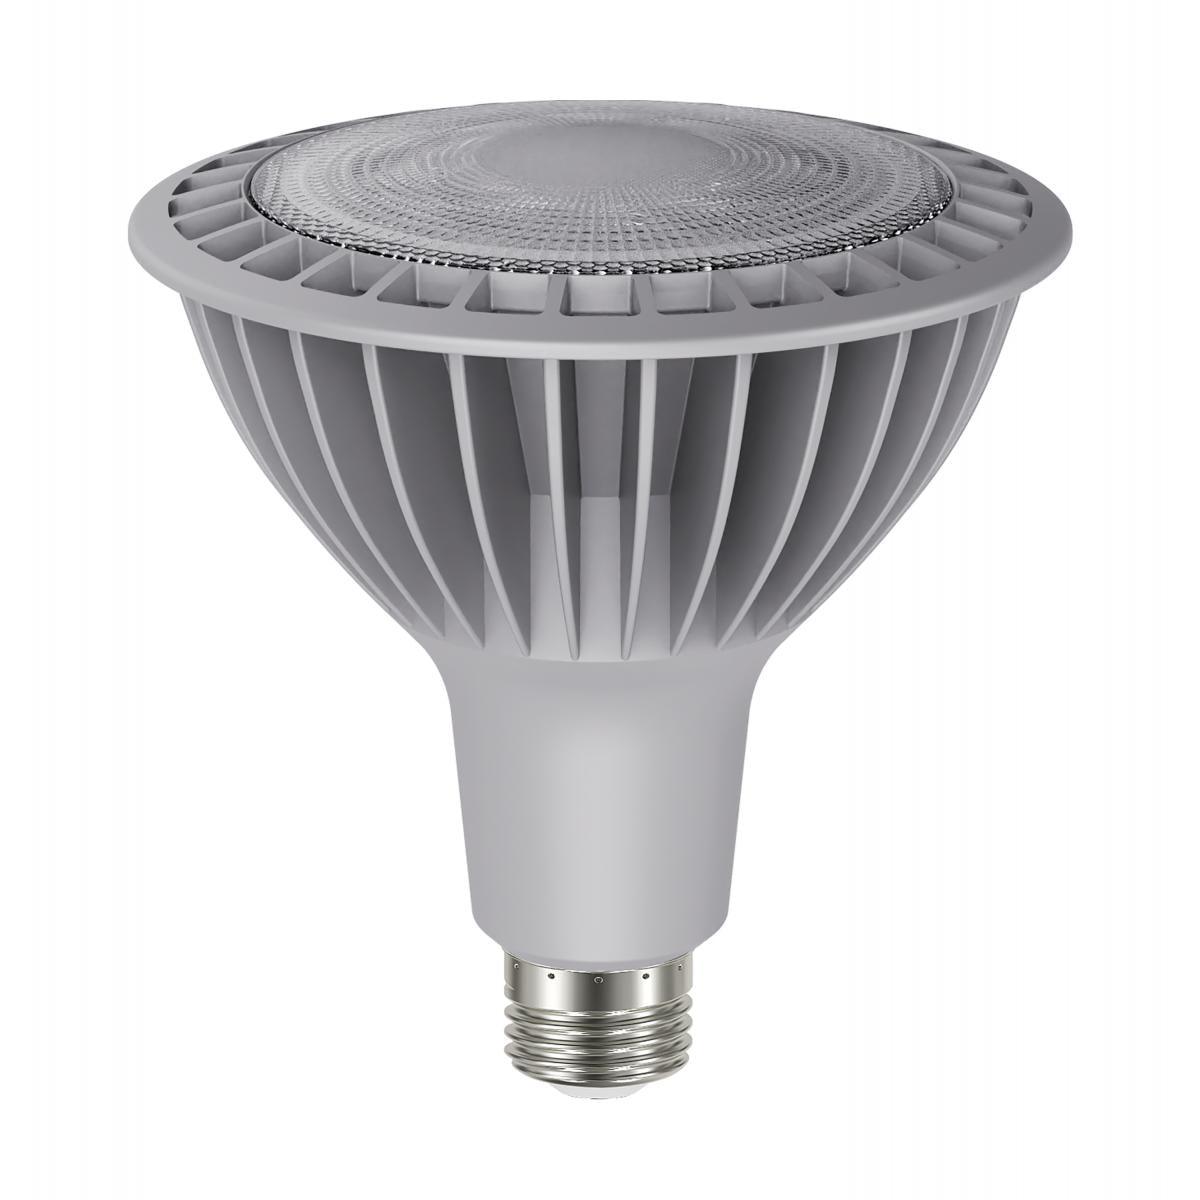 PAR38 Reflector LED Bulb, 27 watt, 2400 Lumens, 3000K, E26 Medium Base, 40 Deg. Flood